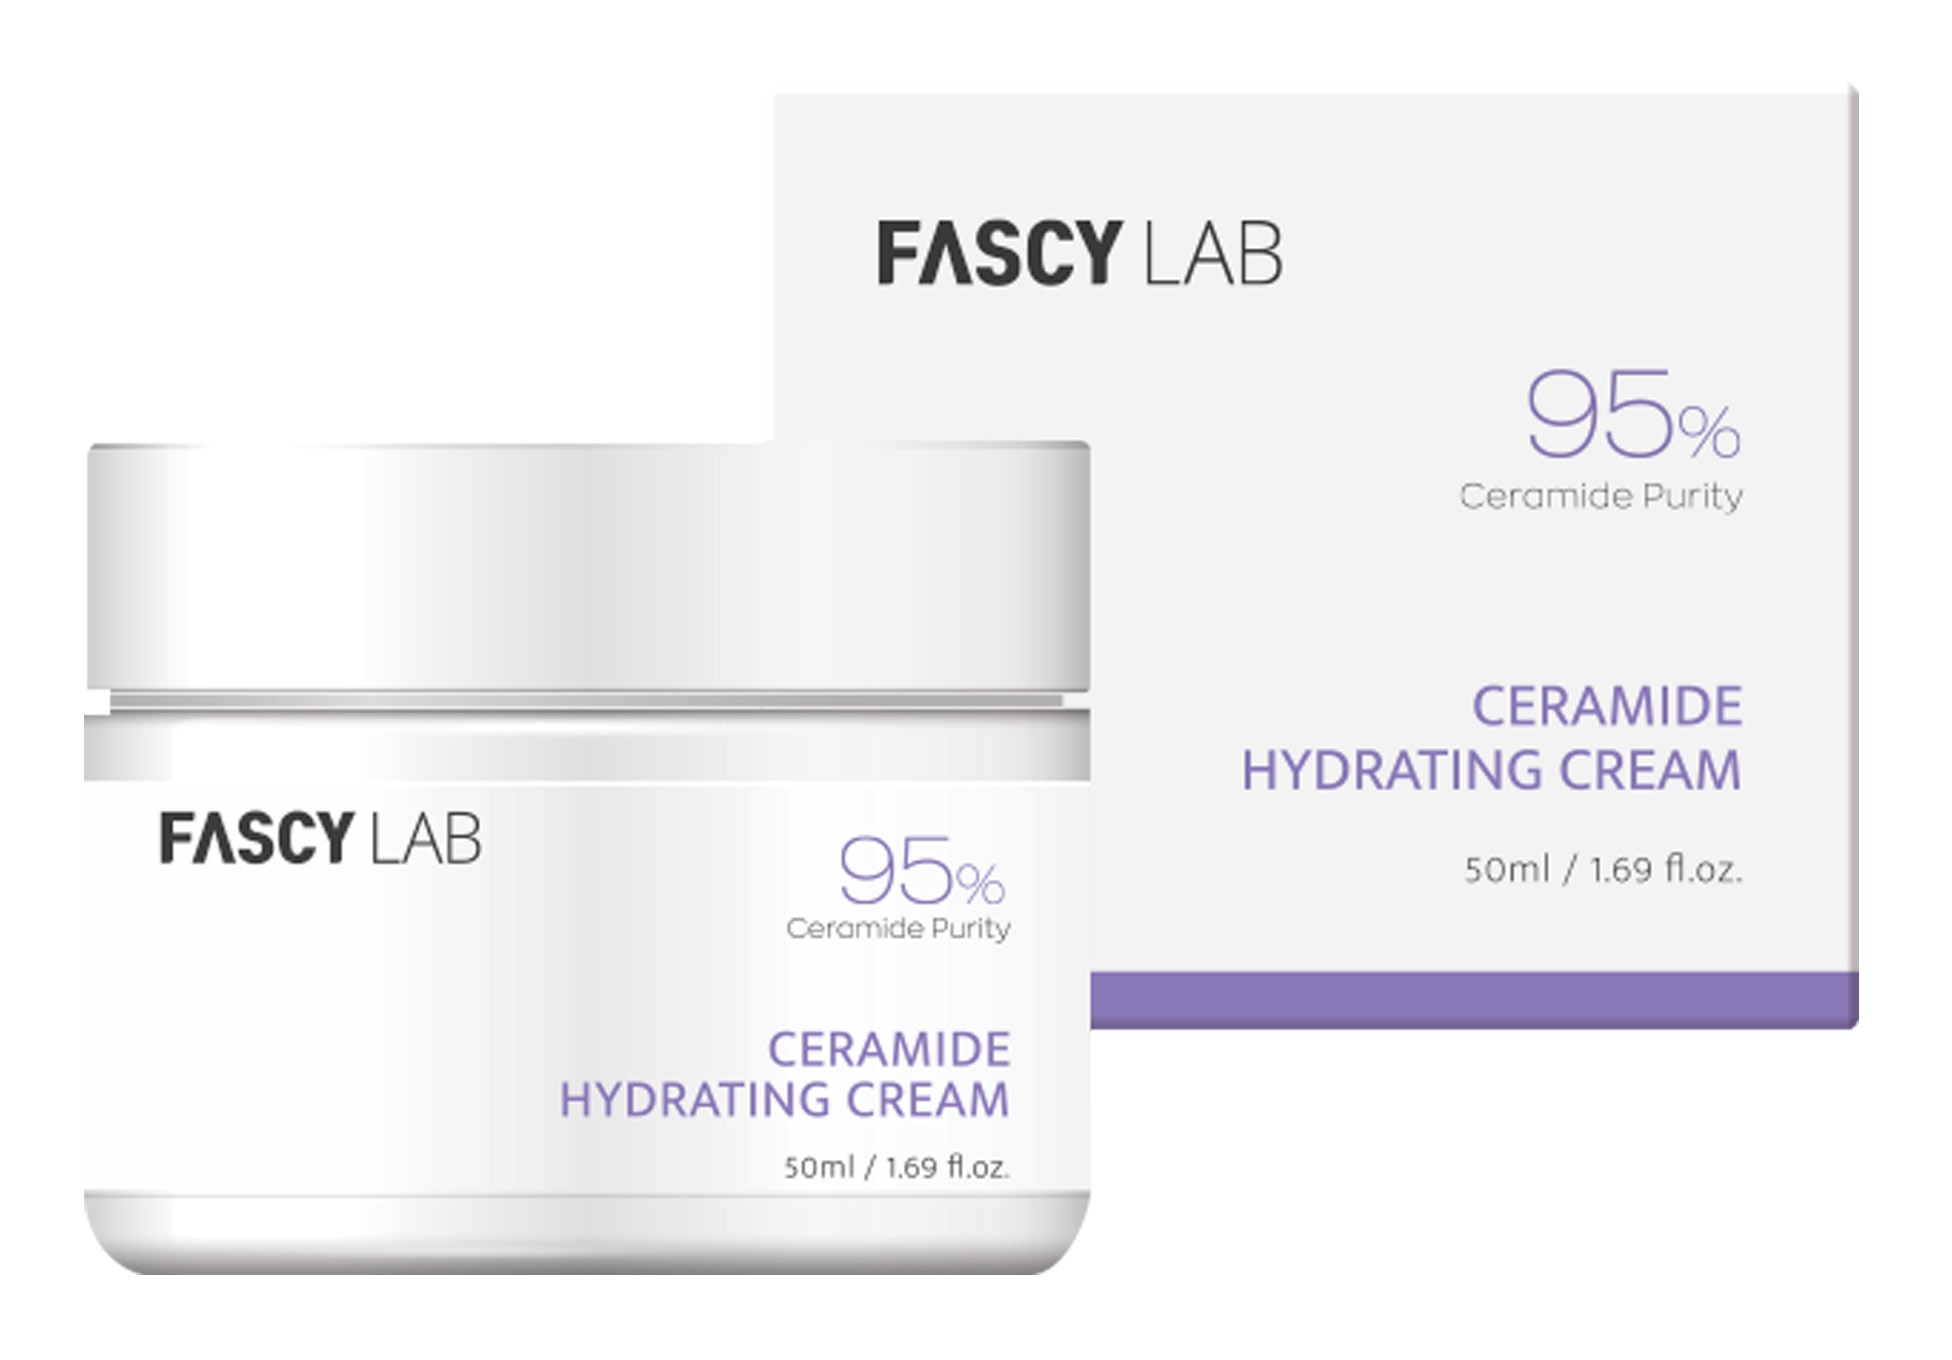 FASCY LAB Ceramide Hydrating Cream